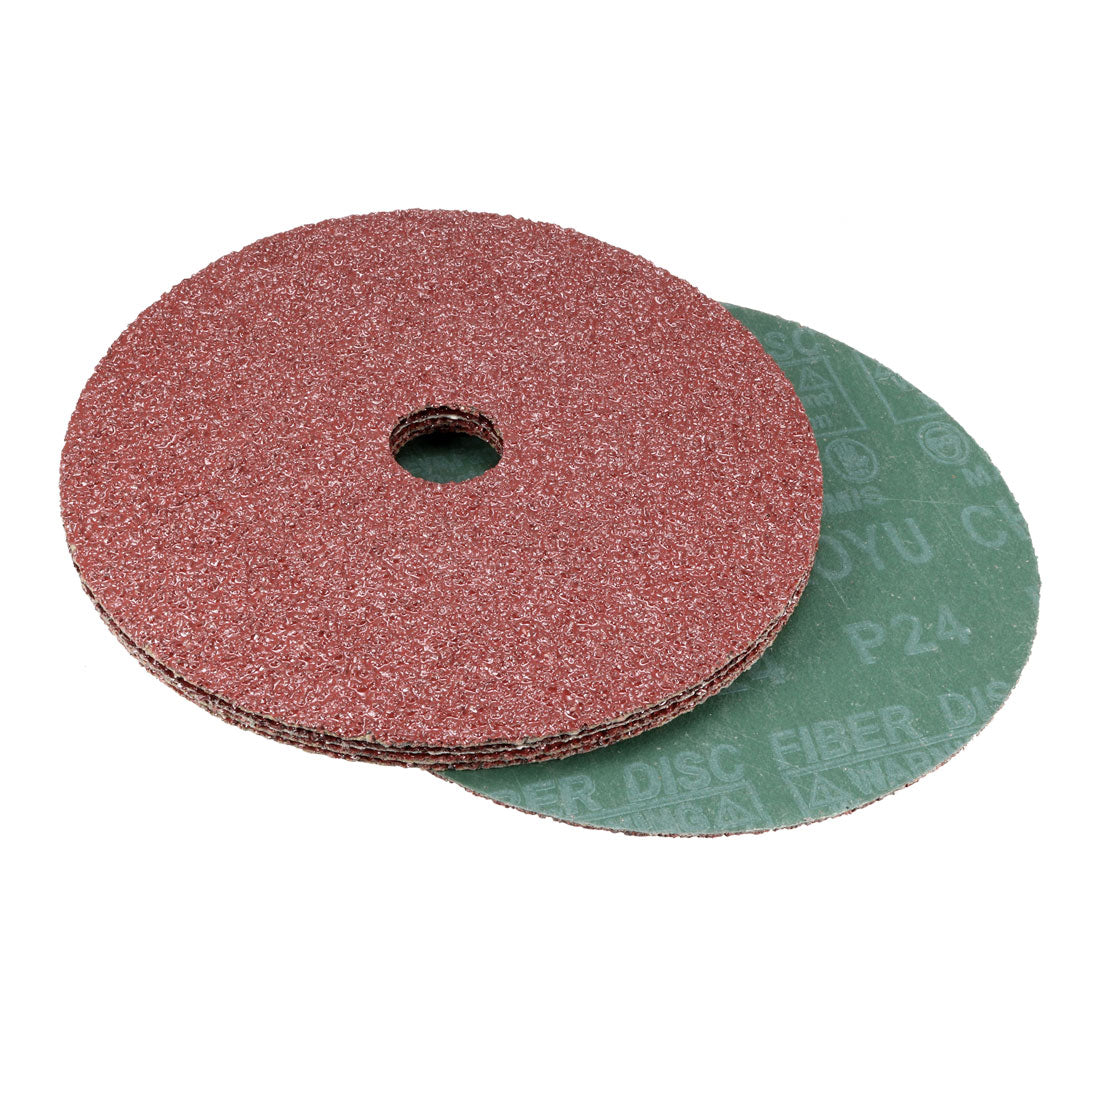 uxcell Uxcell Aluminum Oxide Resin Fiber Discs Tool, Center Hole Sanding Grinding Discs